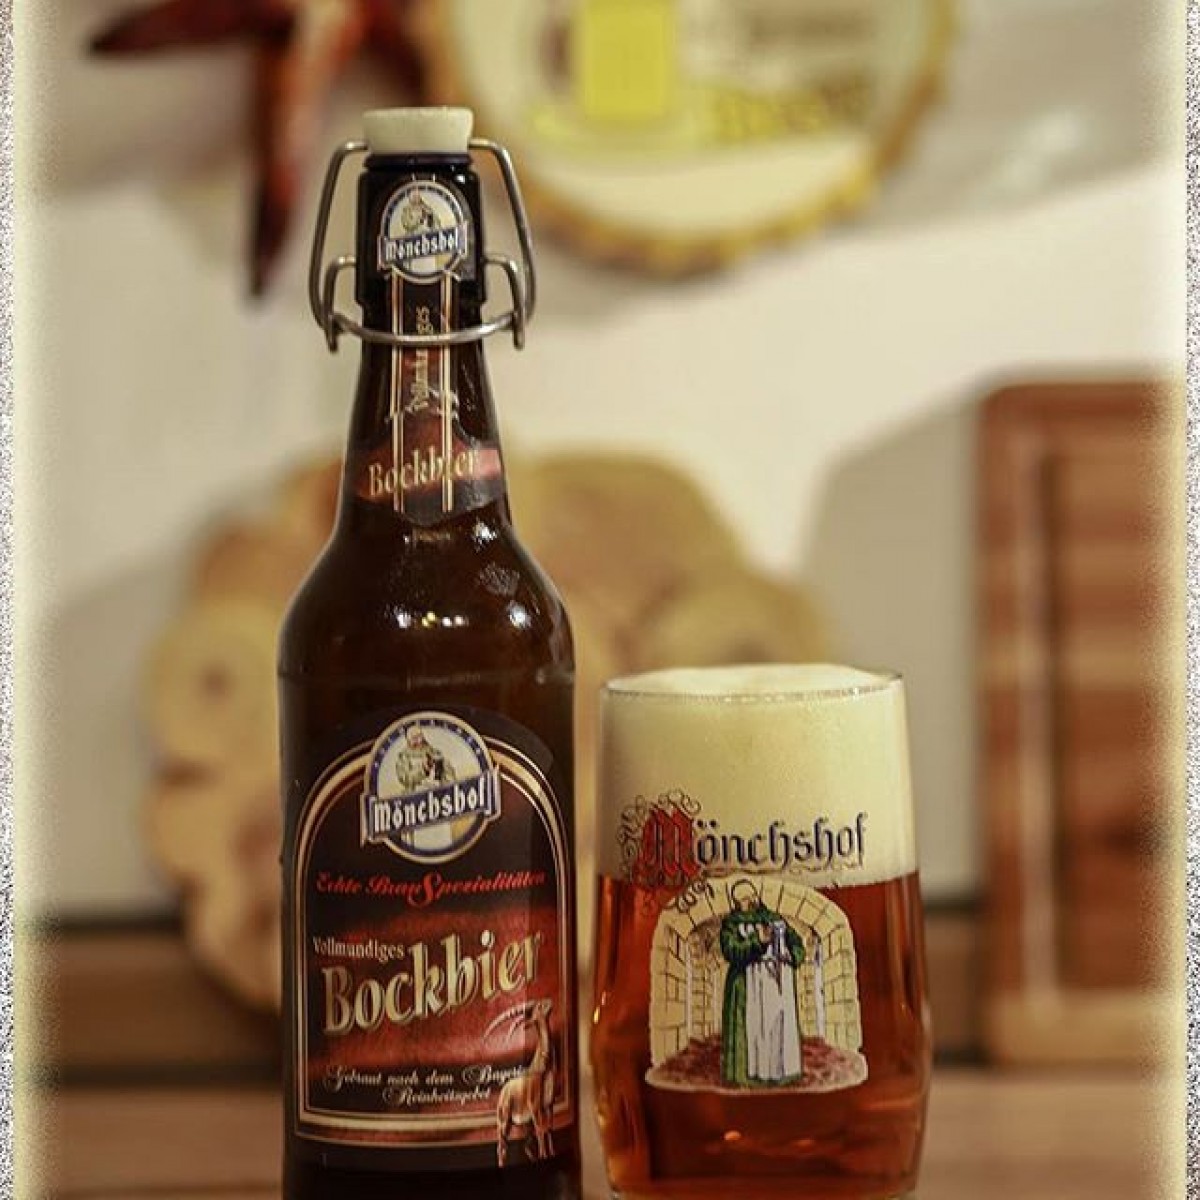 Bia Monchshof Bockbier 6,9%